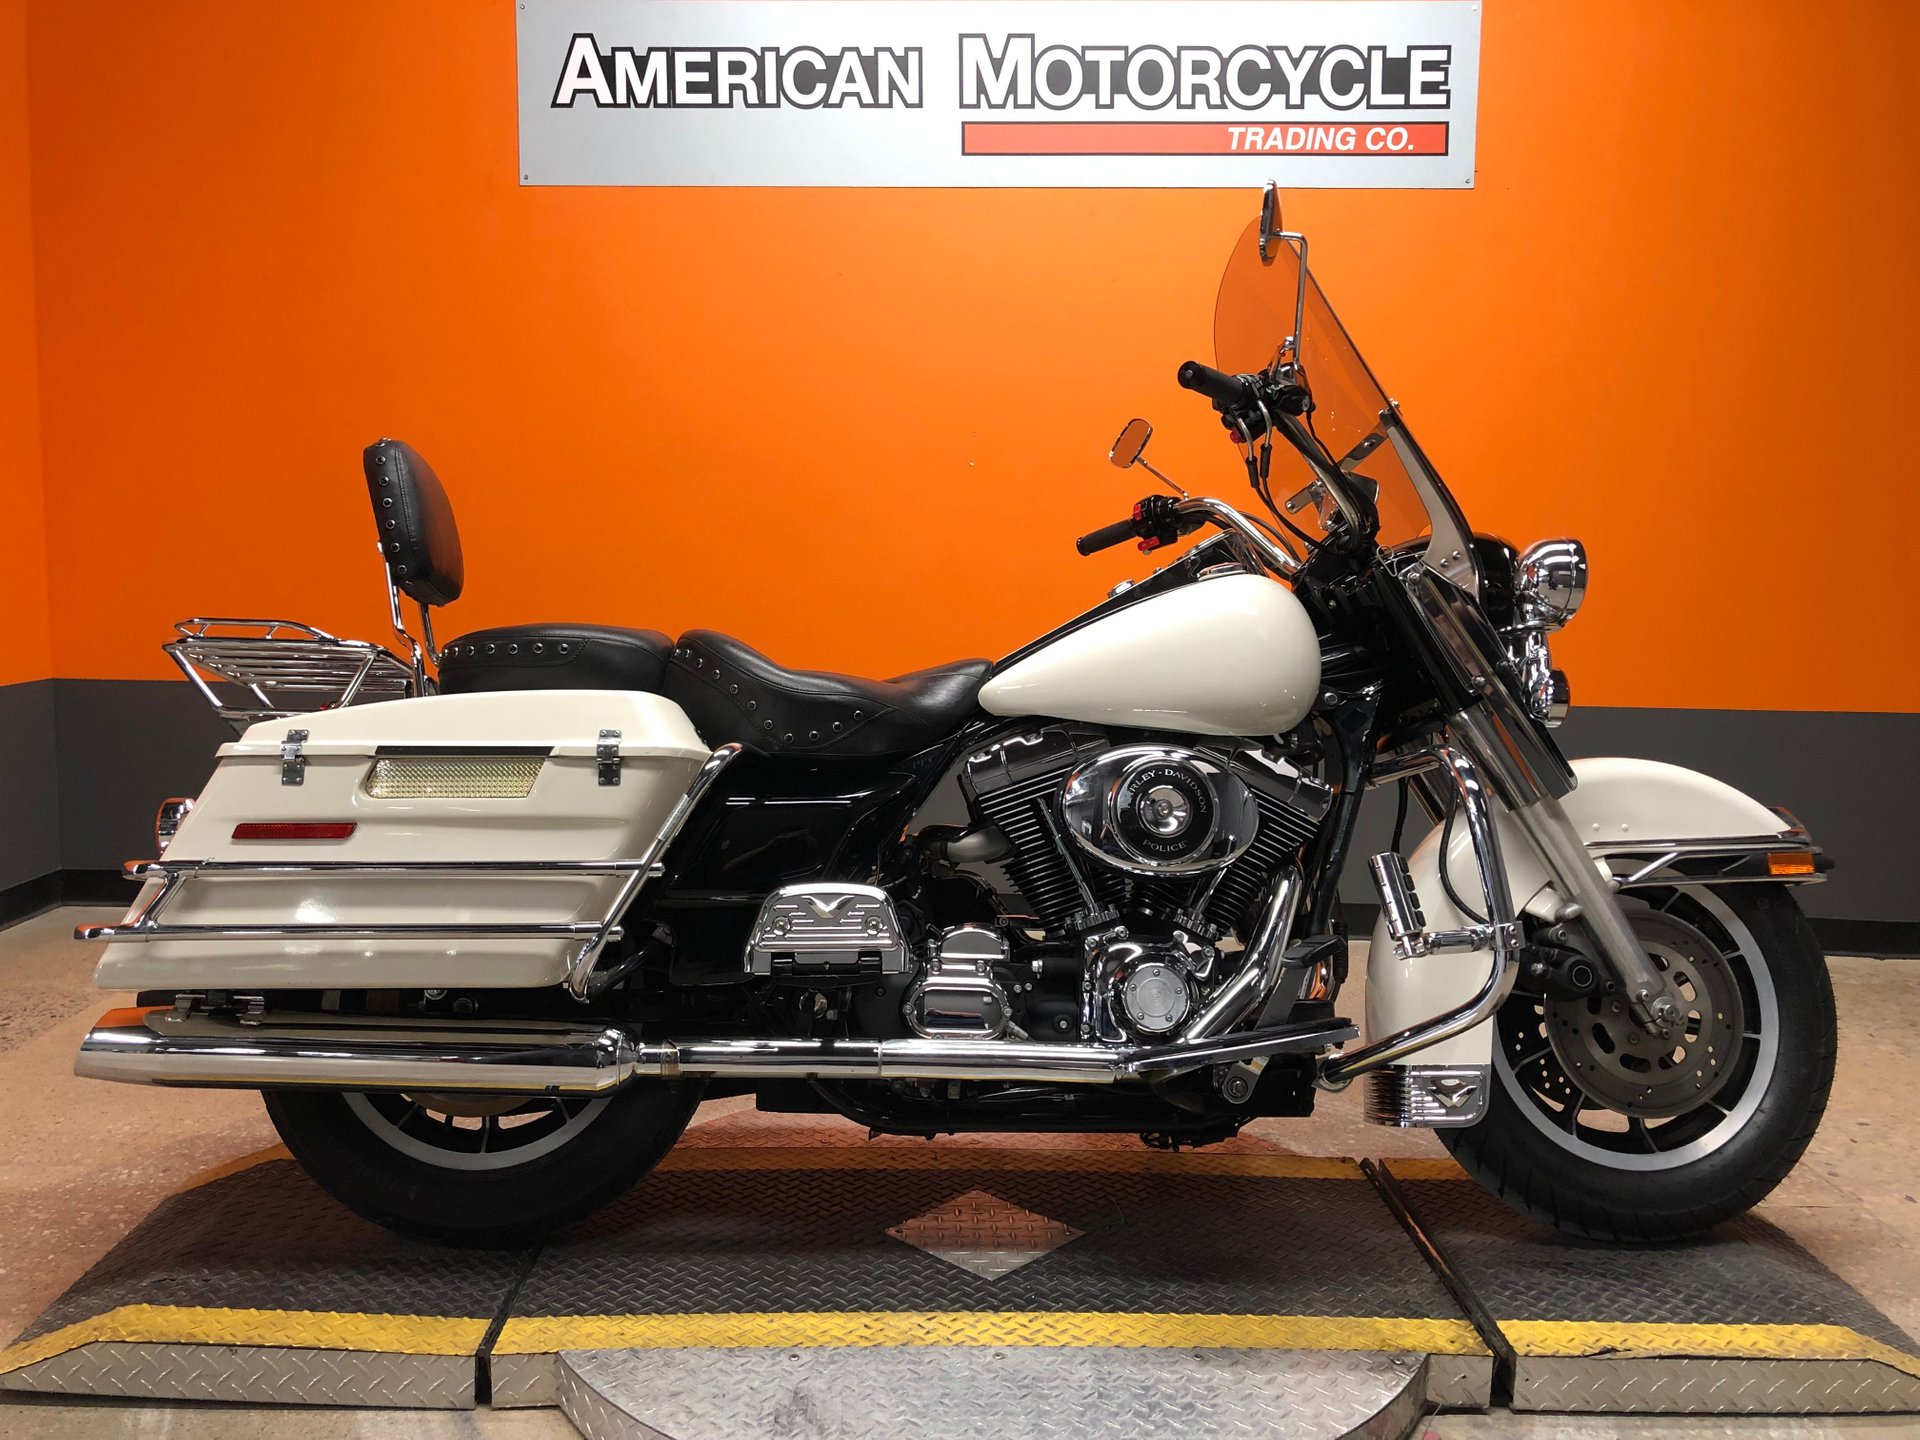 1999 Harley-Davidson Road King | American Motorcycle Trading Company - Used  Harley Davidson Motorcycles